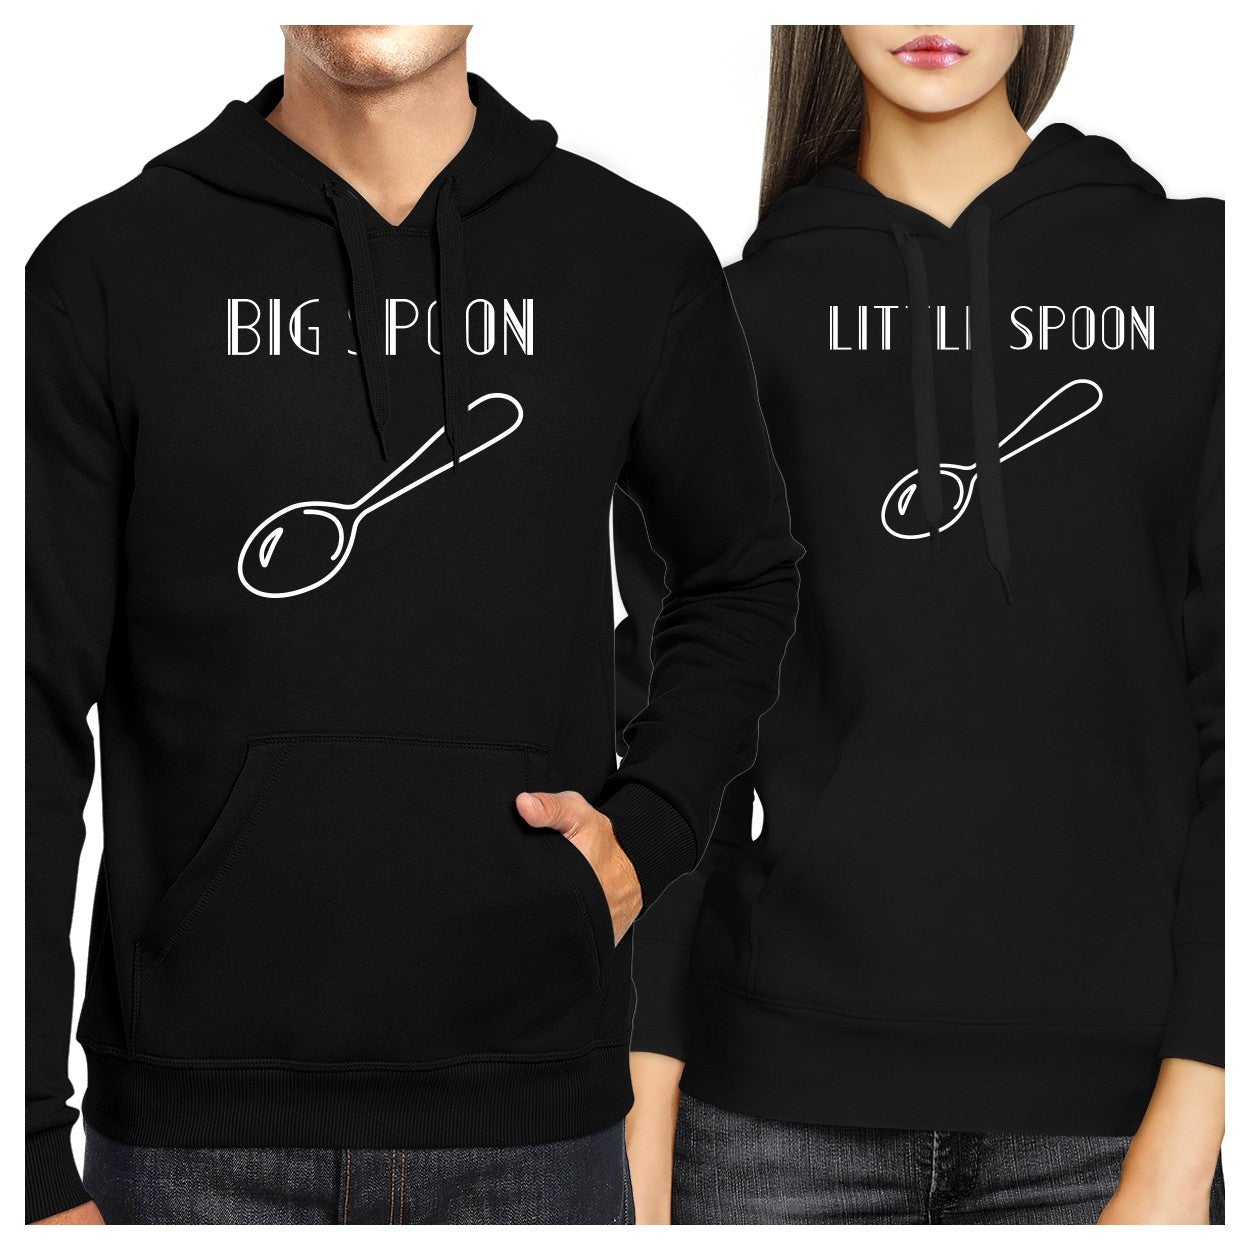 Big Spoon And Little Spoon Couple Hoodies Matching Christmas Gift Black